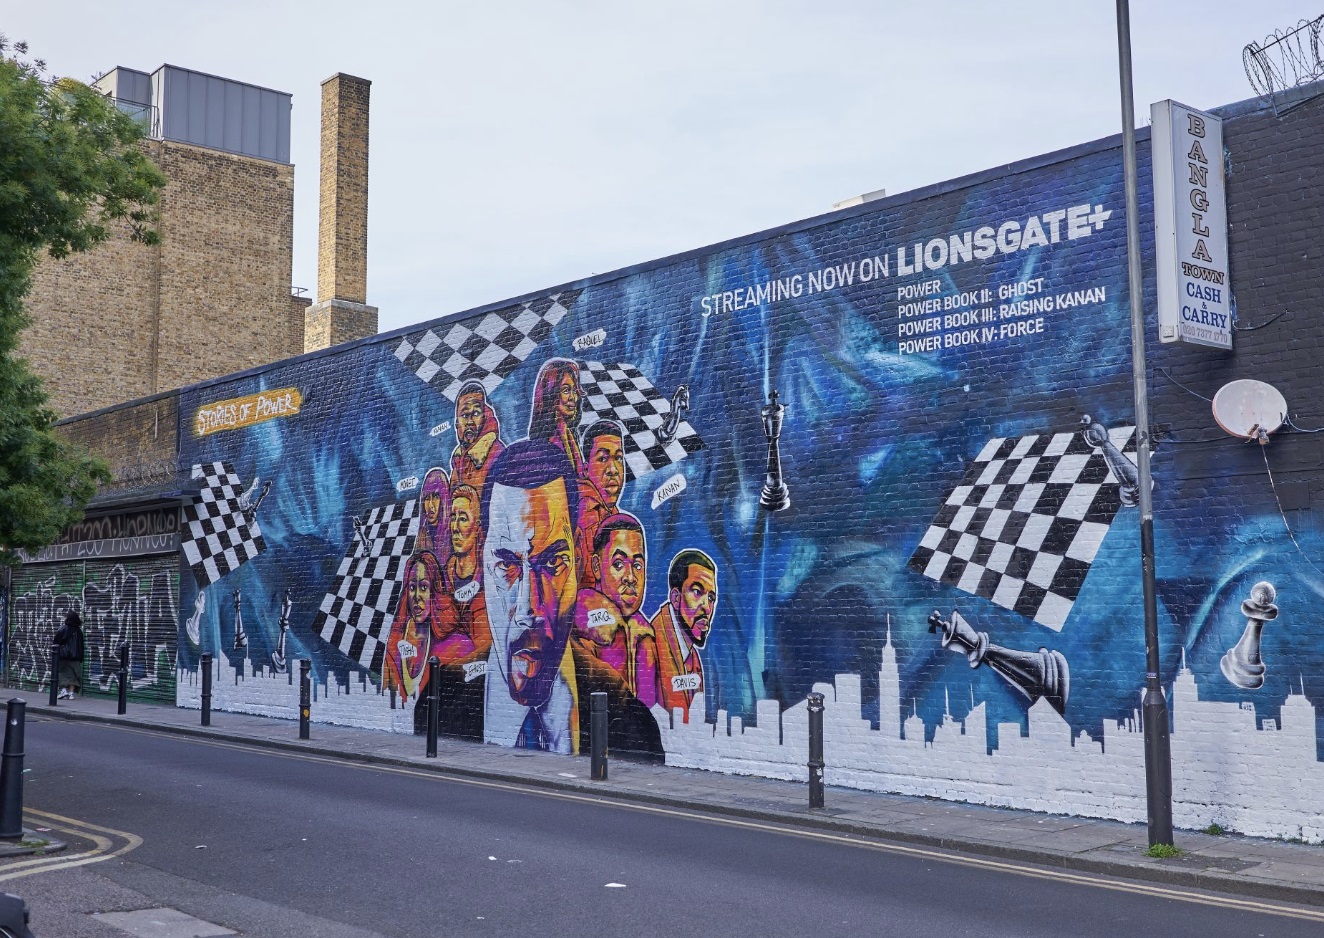 Lawless Studio presents Lionsgate: Black History Month on the Hanbury Street Wall